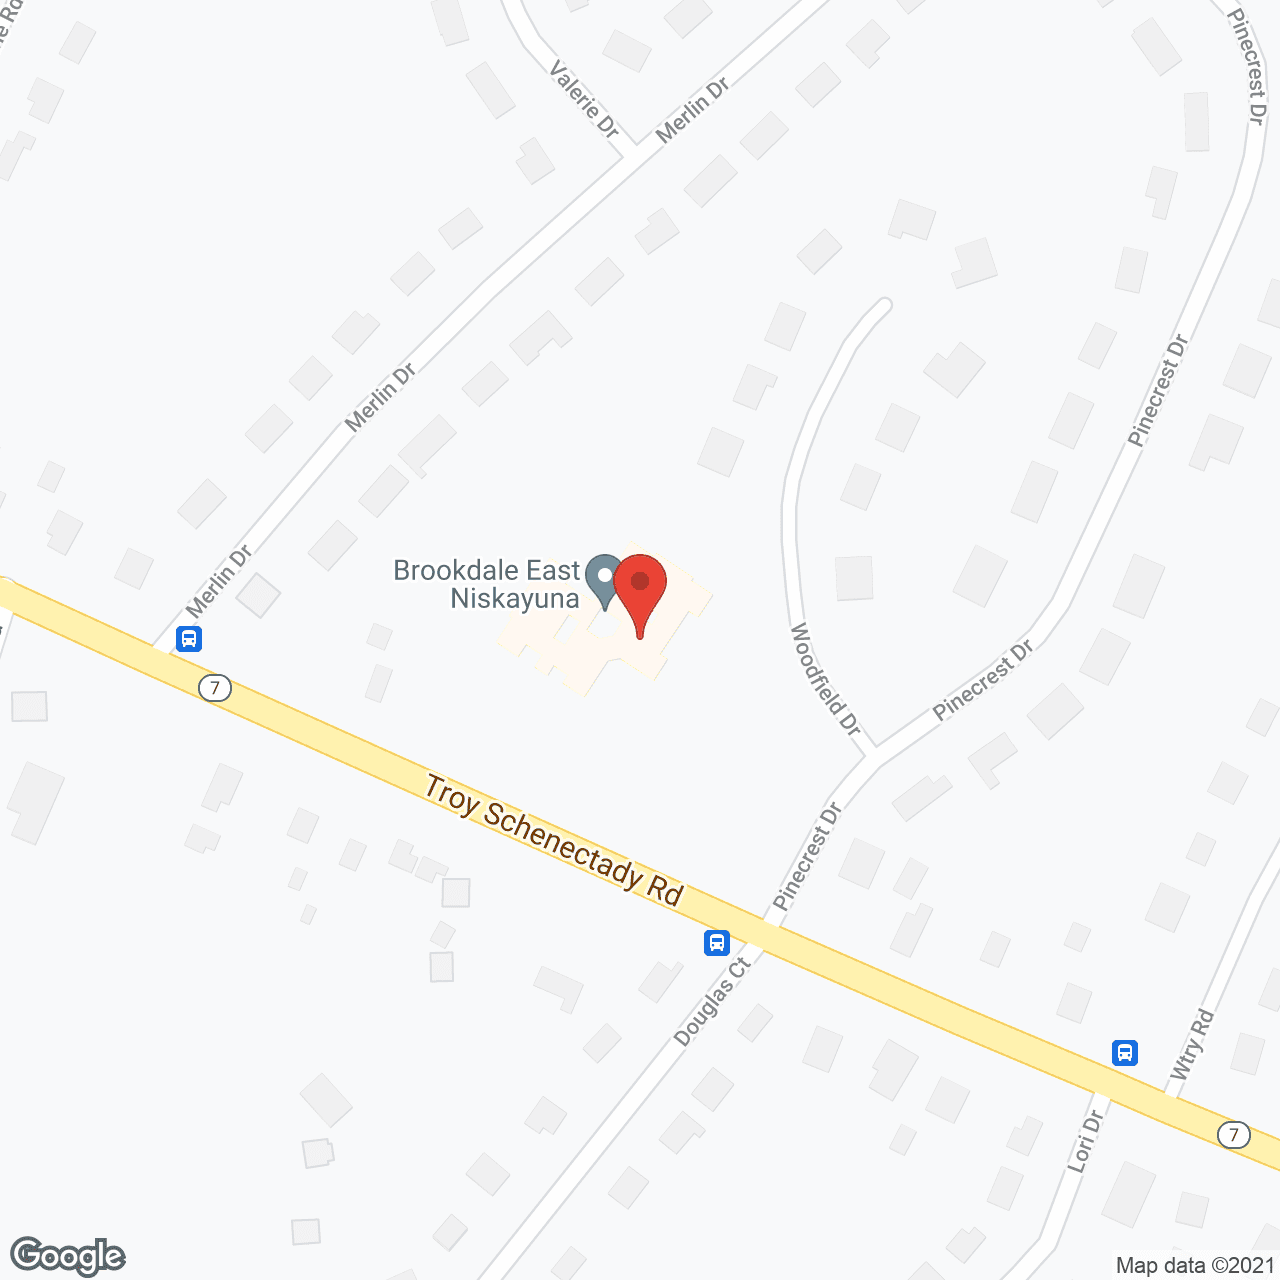 Brookdale East Niskayuna in google map